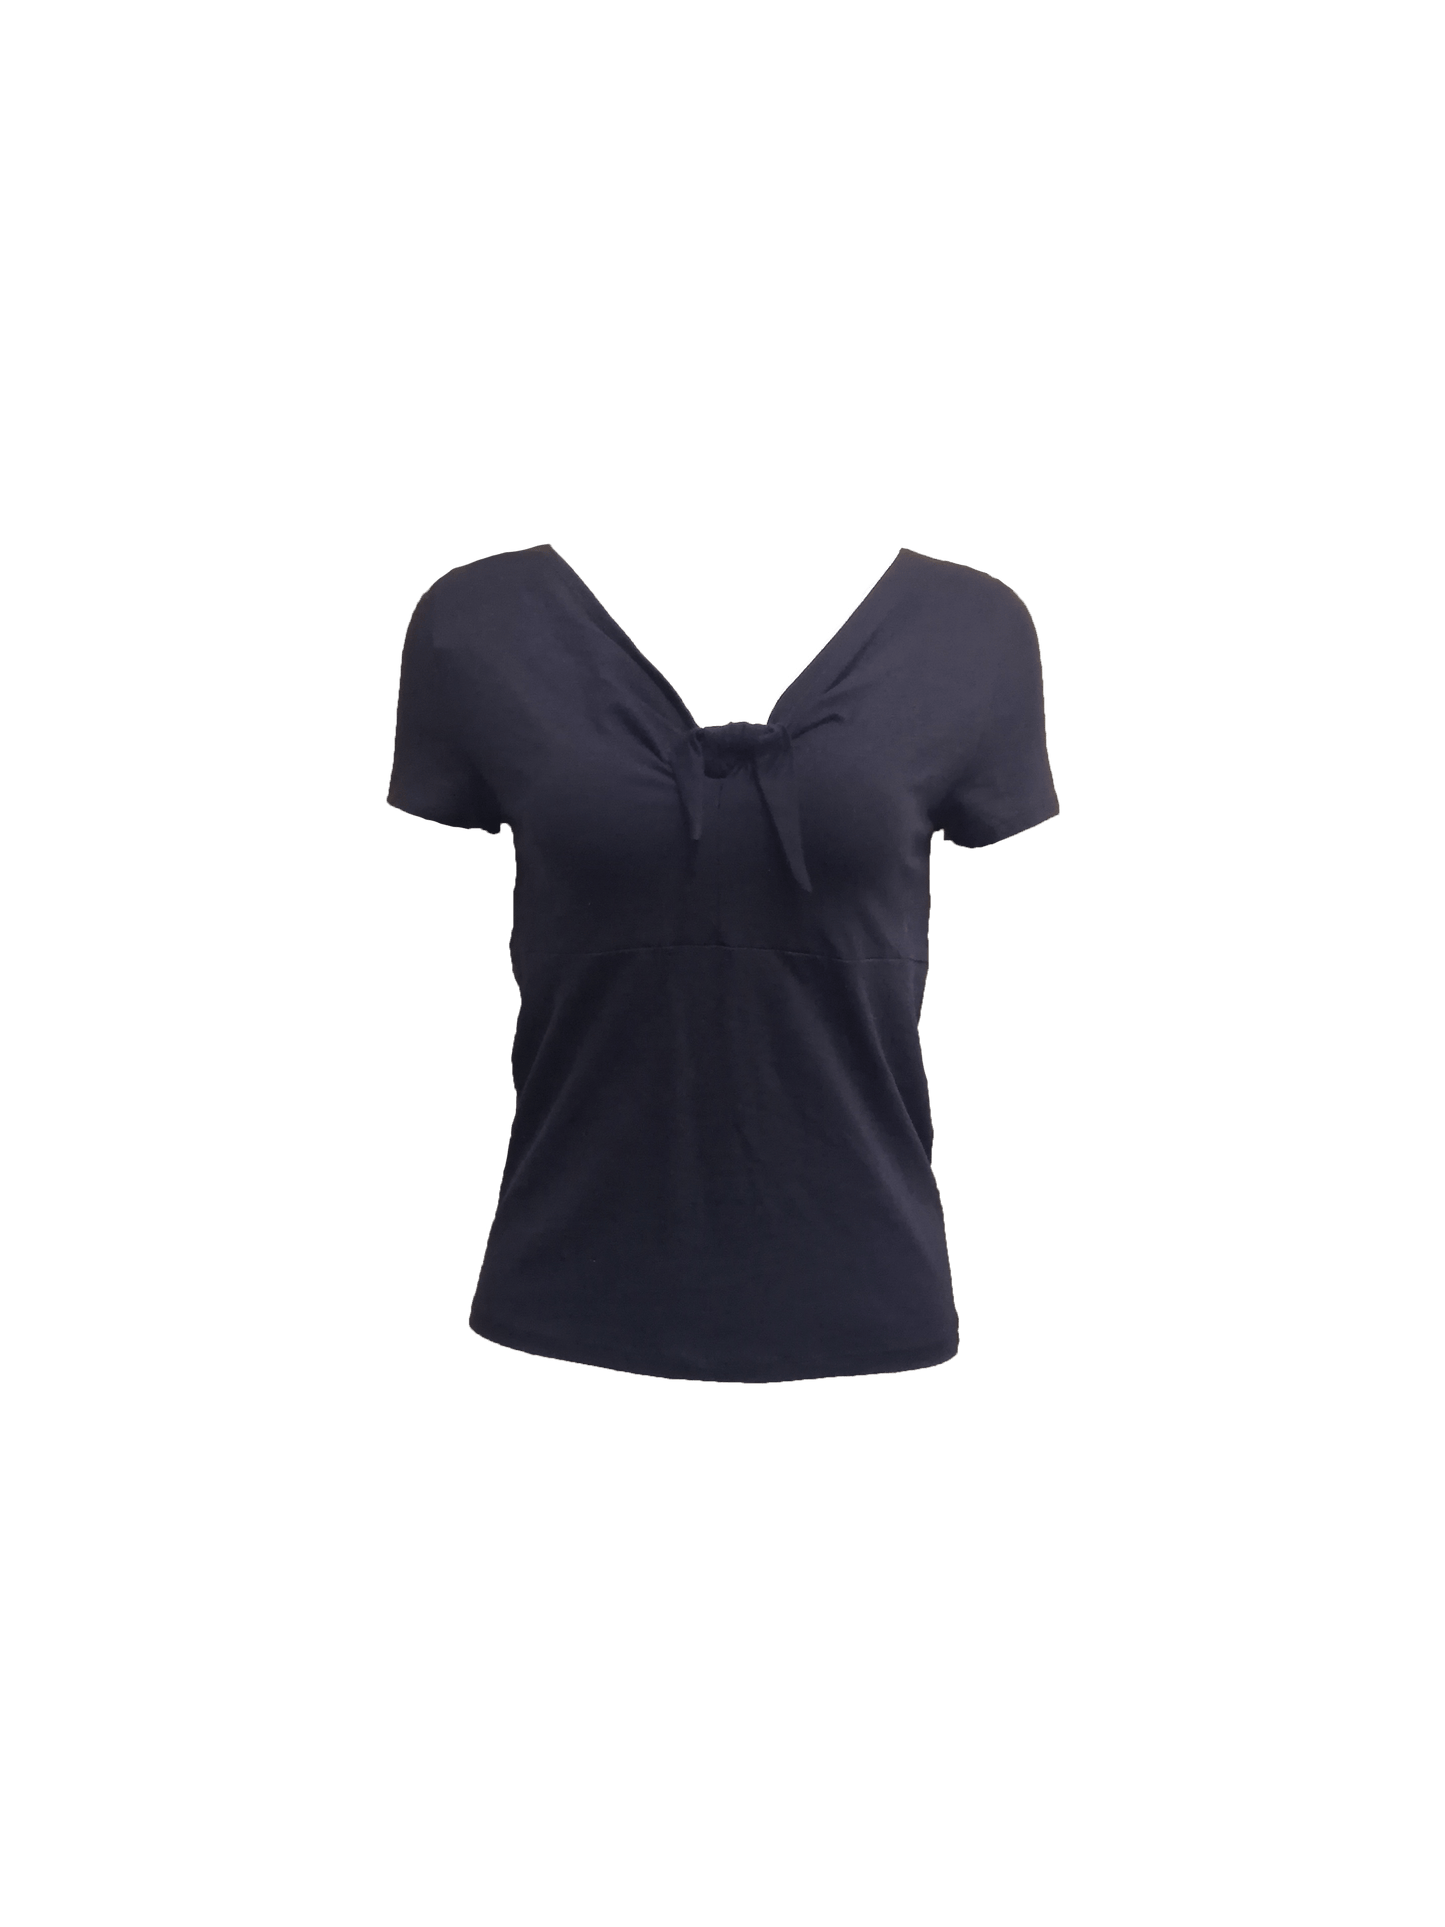 ARIZONA JEAN CO Womens Tops Short Sleeve Shirt